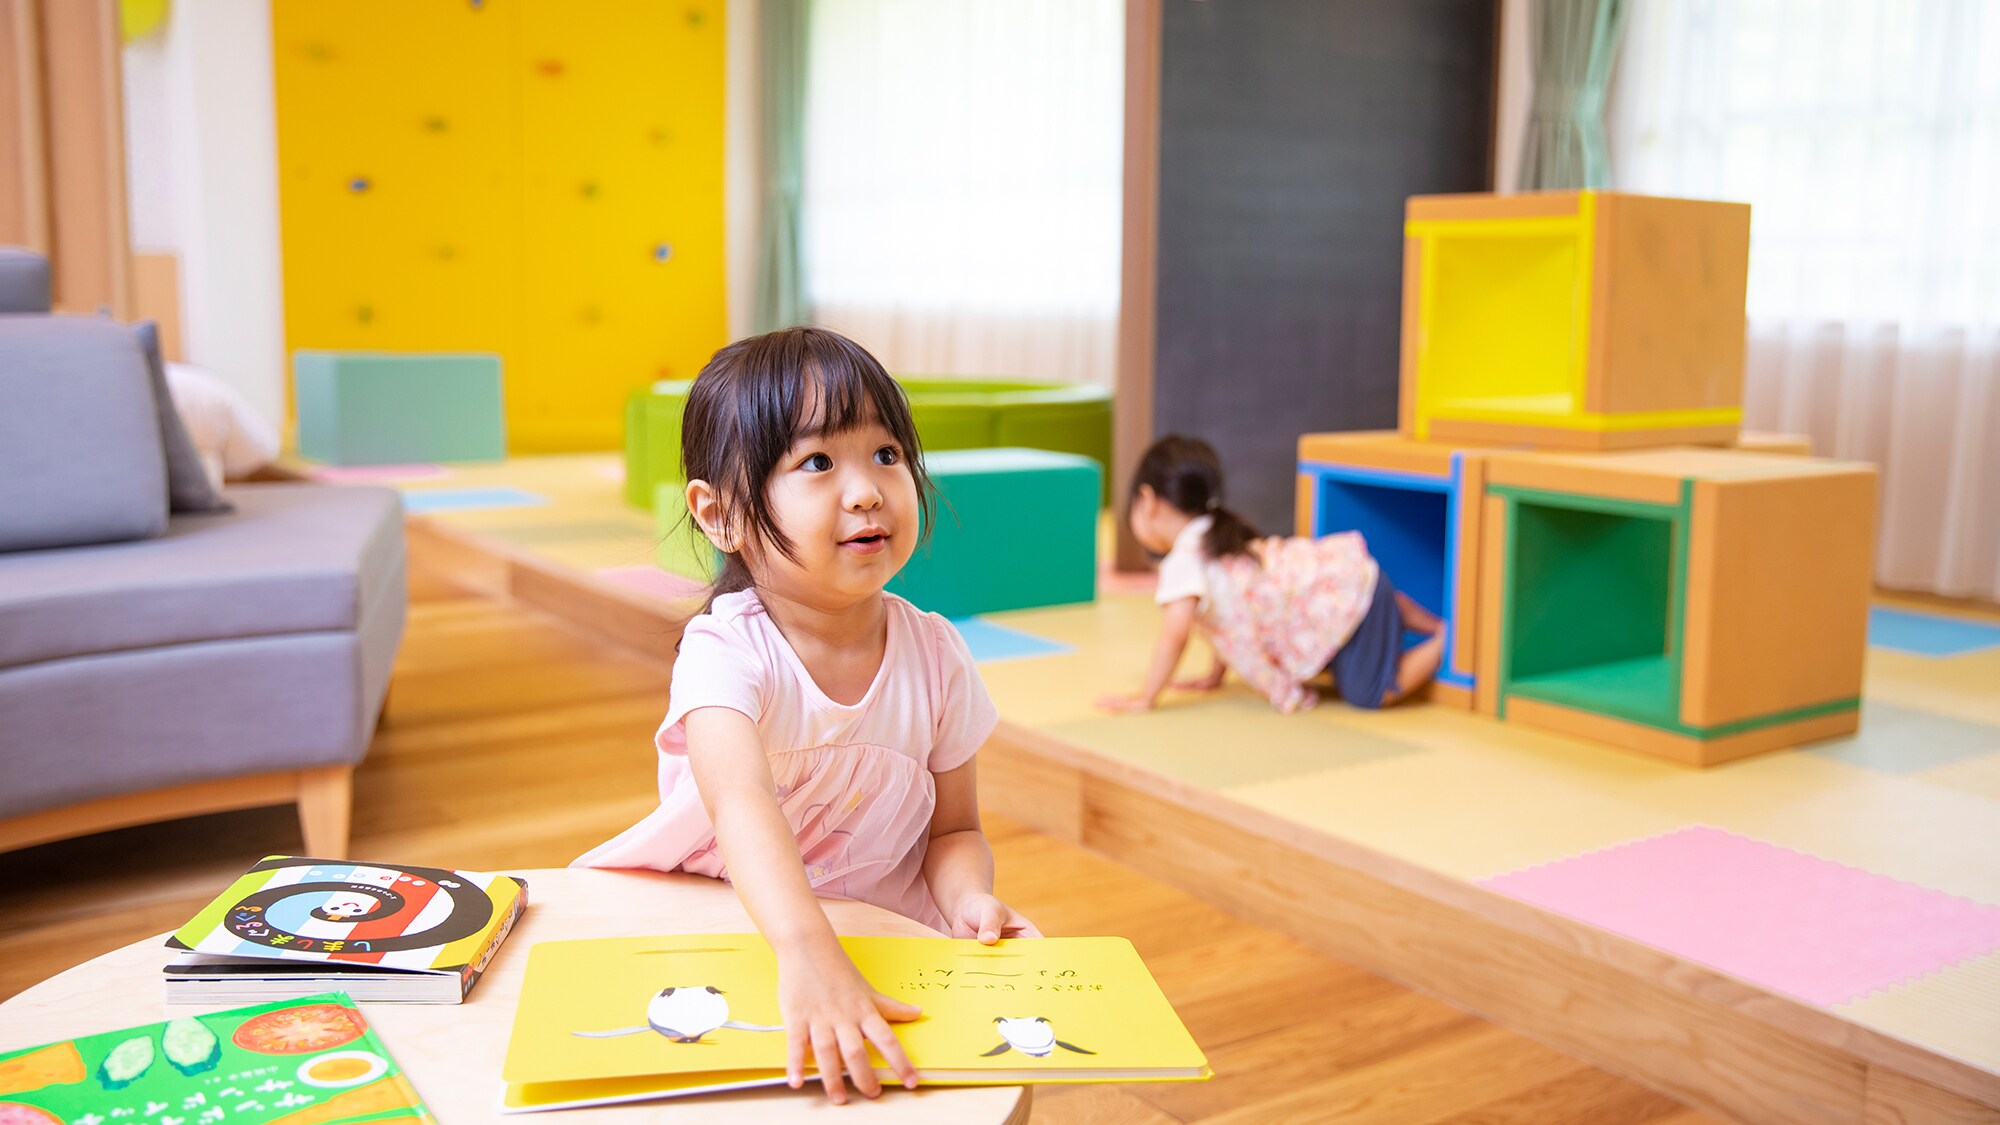 [Kids Special Room] พื้นที่สำหรับเด็กก็ใช้ได้เหมือนเดิม! ผู้ปกครองยังสามารถพักผ่อนและดูแล